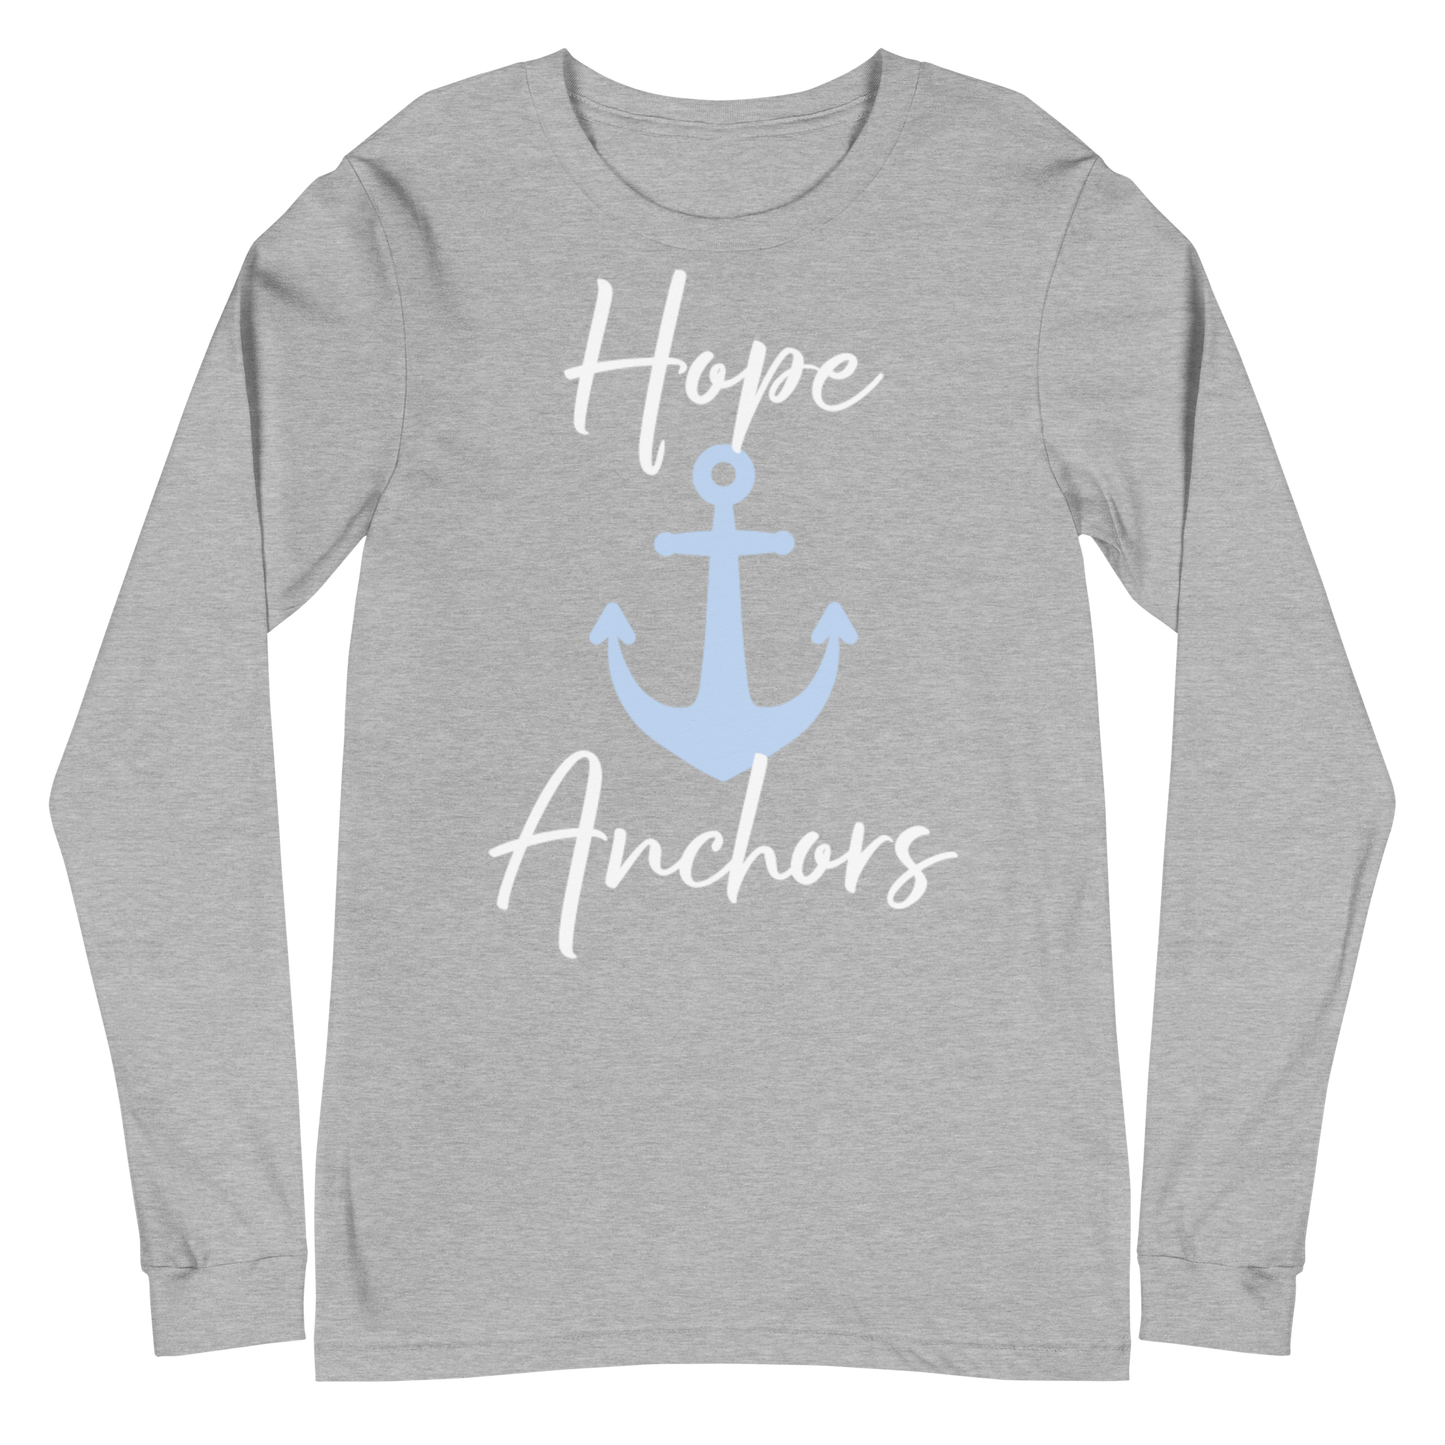 Hope Anchors - Men's Long Sleeve